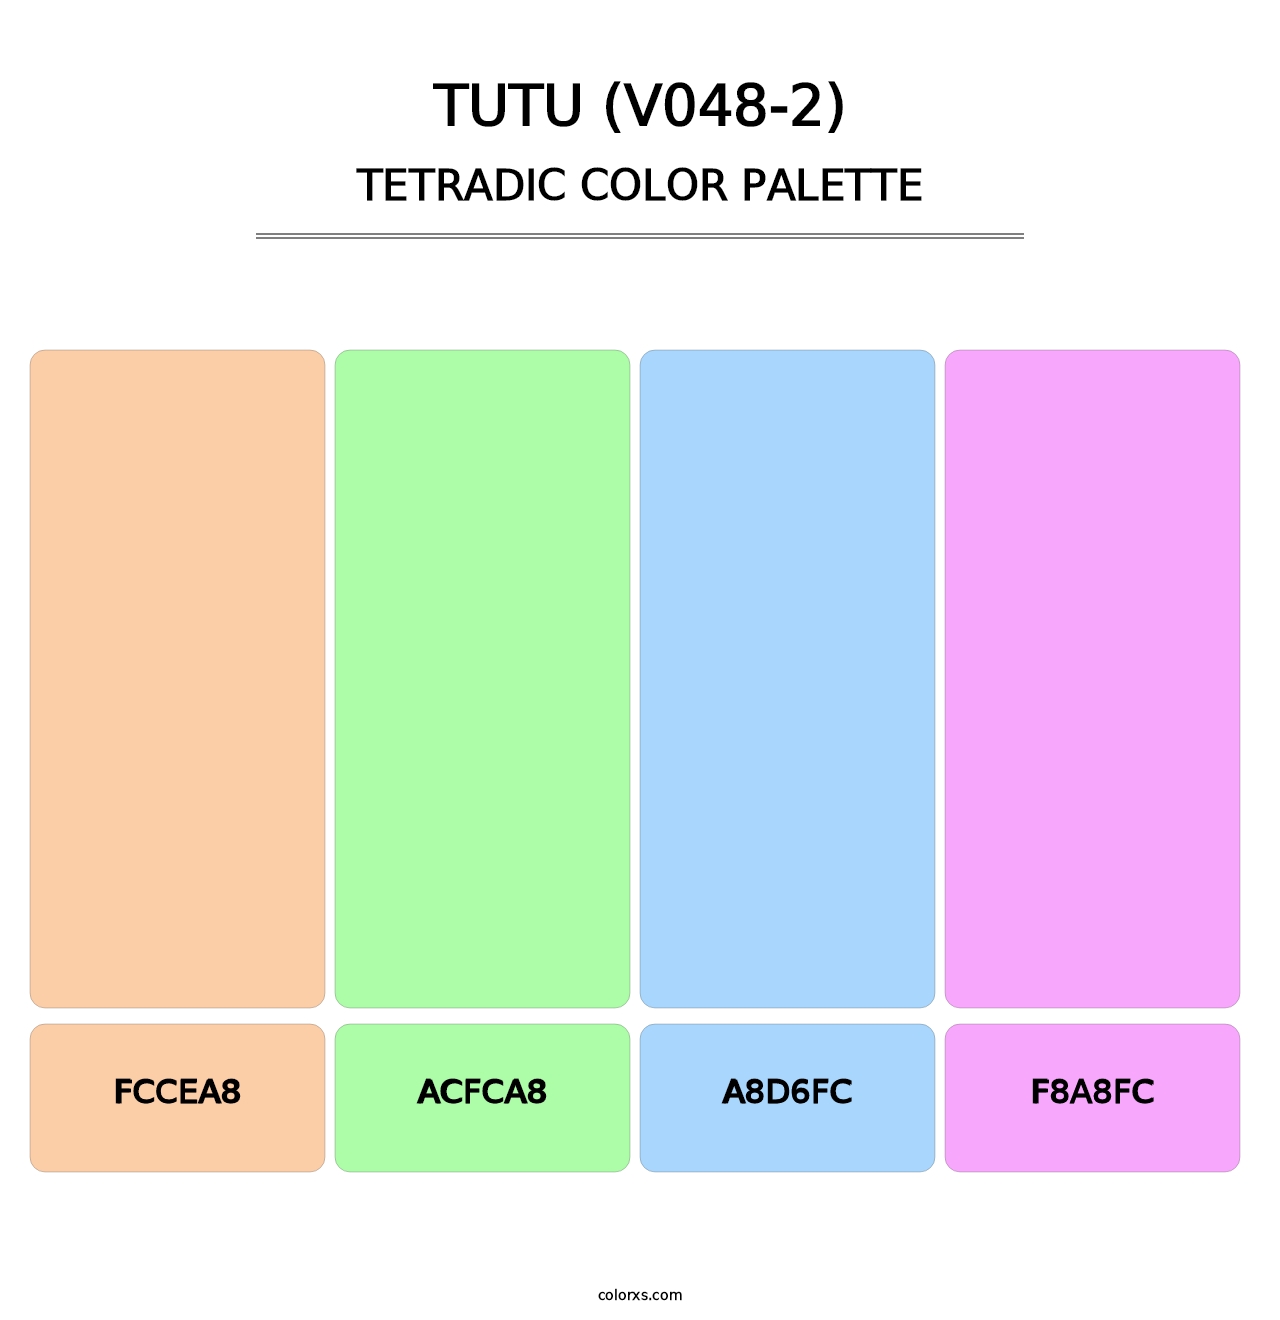 Tutu (V048-2) - Tetradic Color Palette